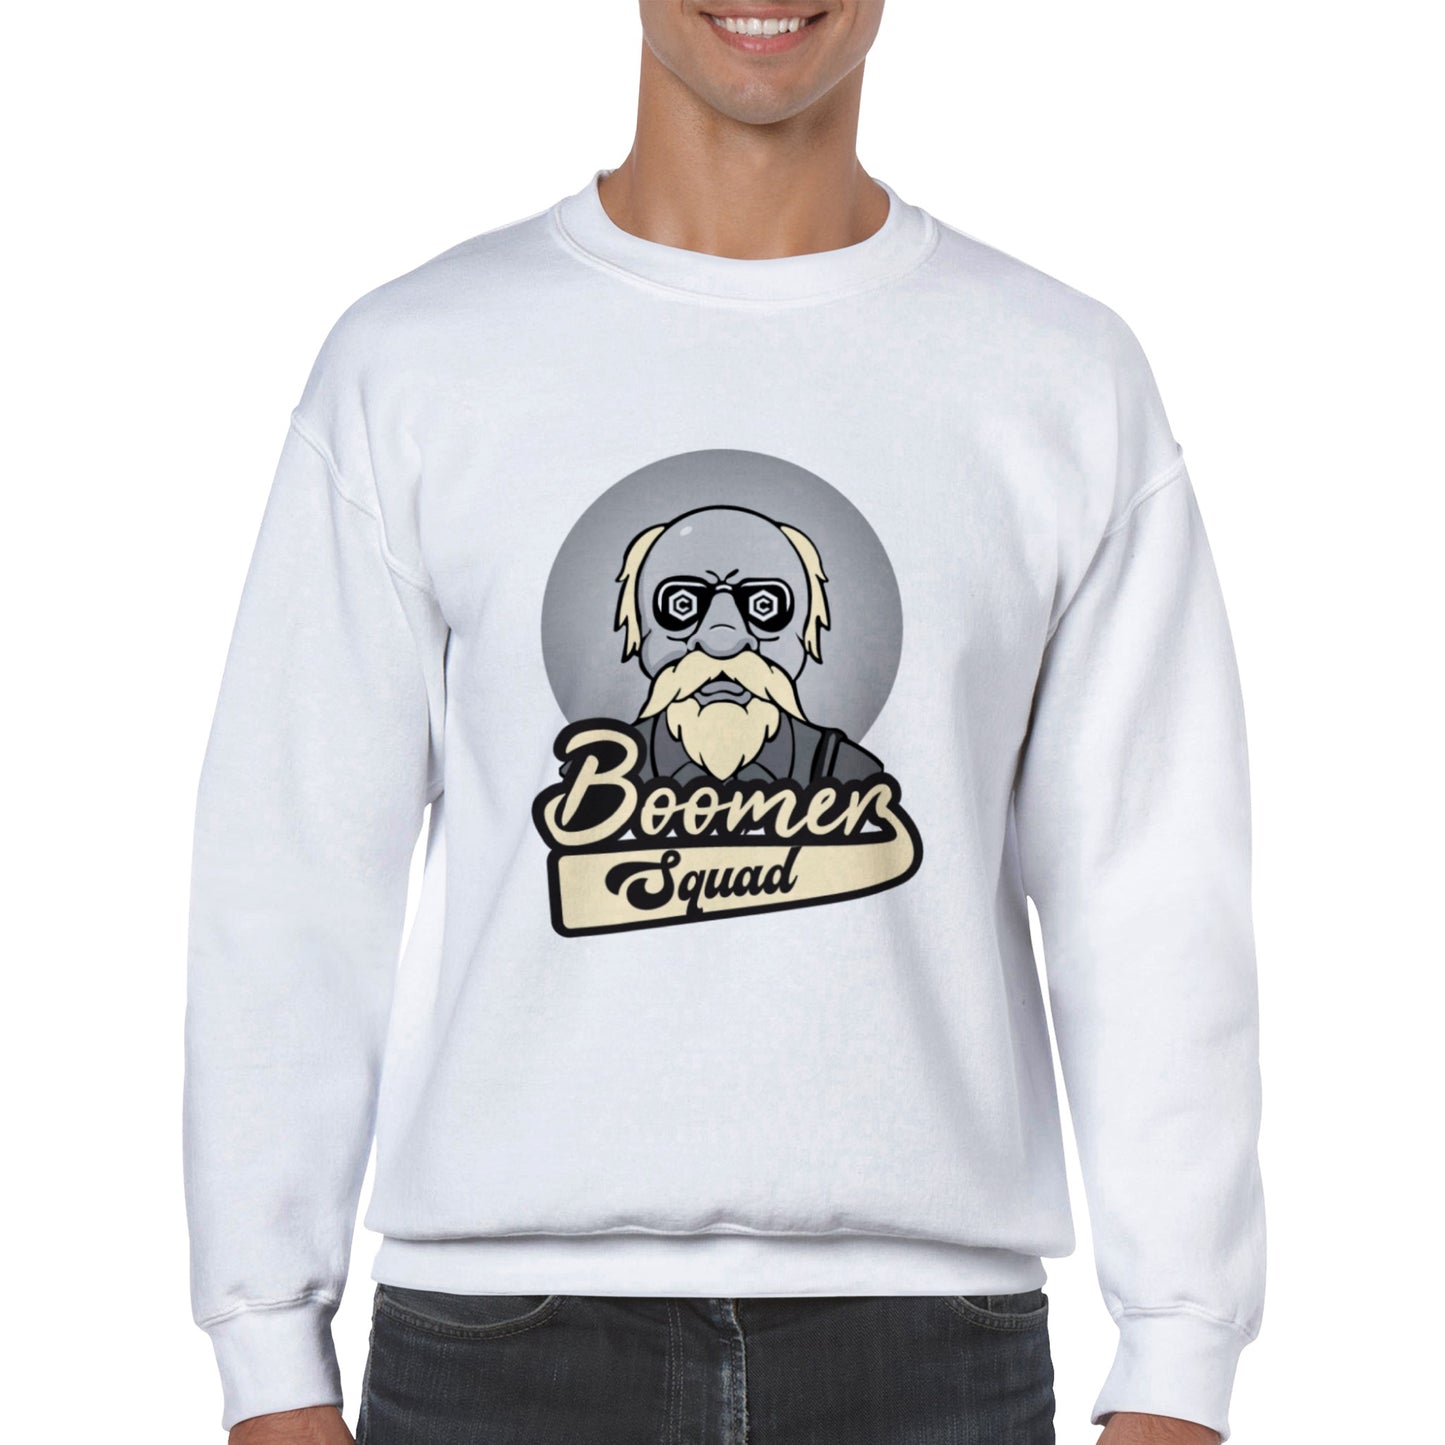 Boomer Squad Classic Unisex Crewneck Sweatshirt